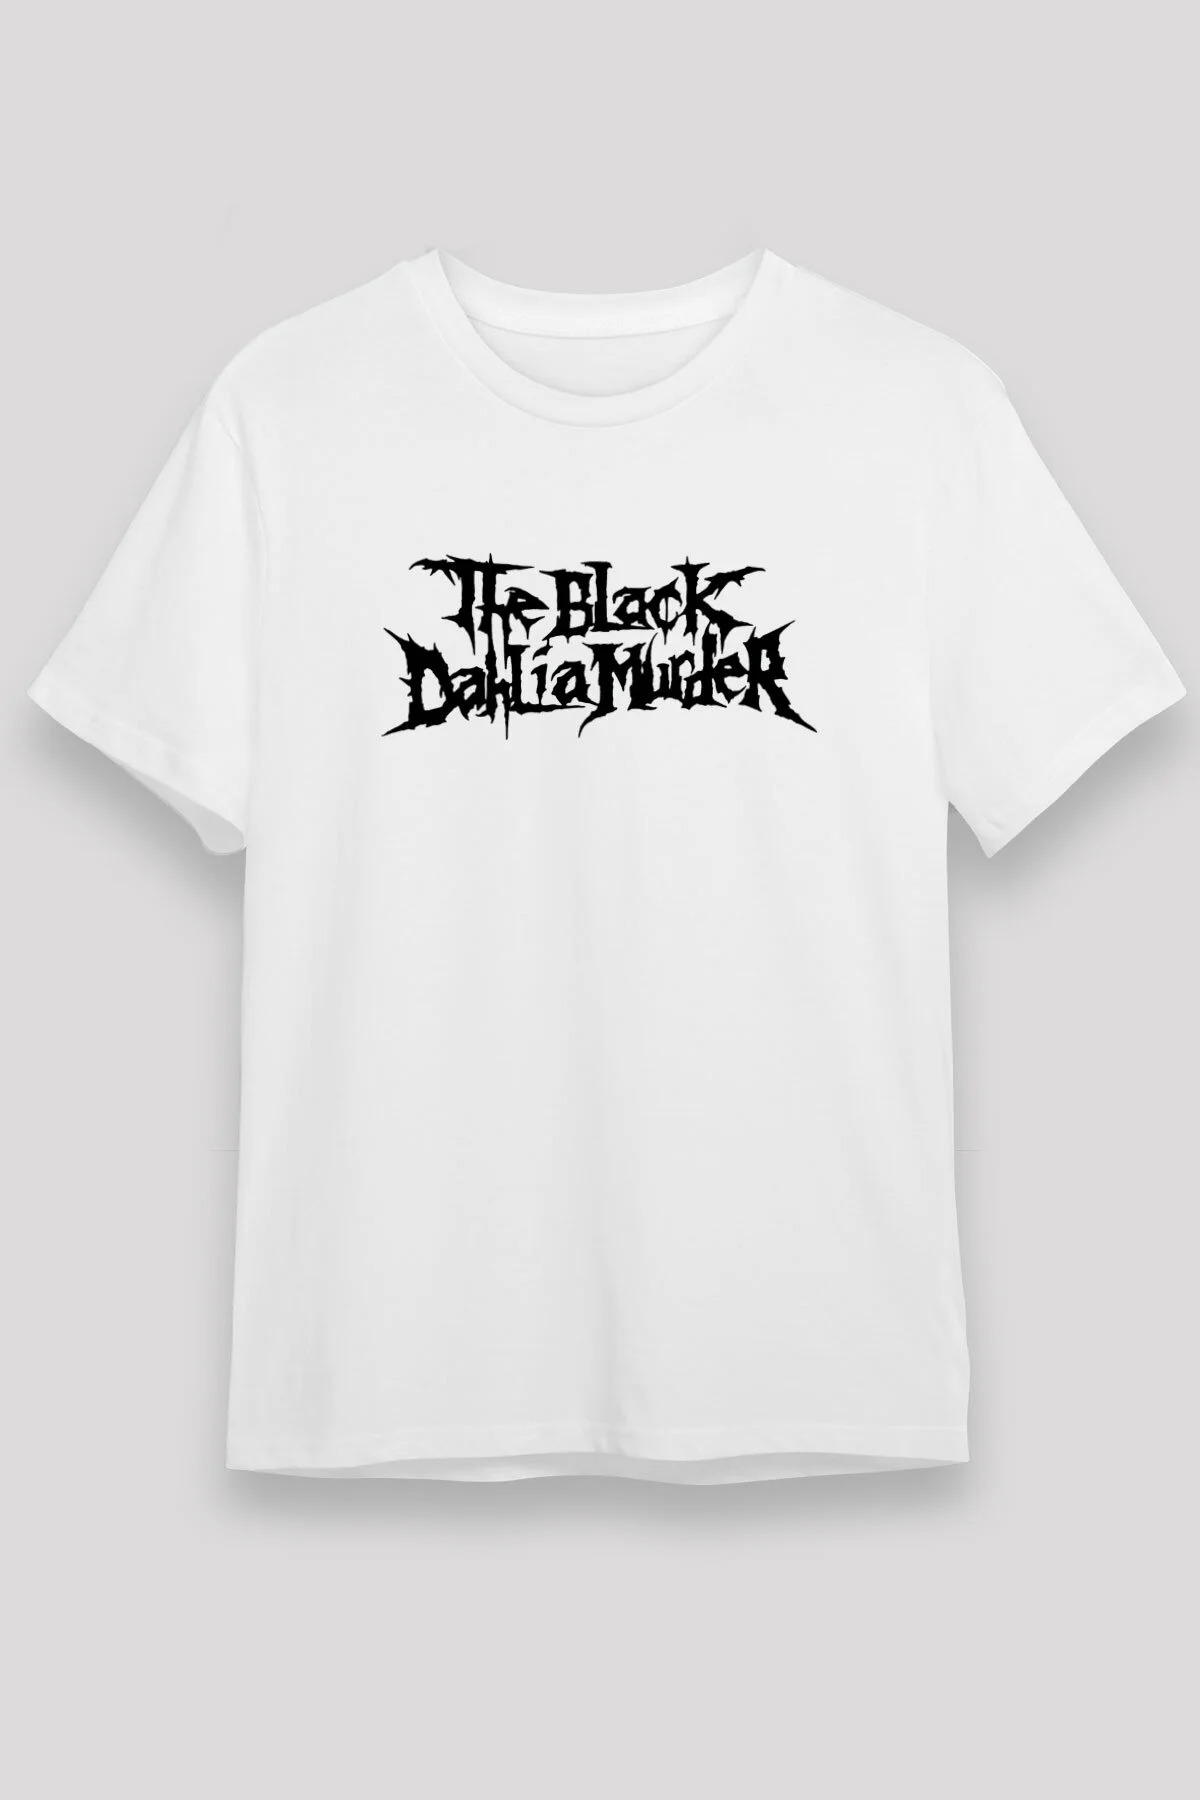 Black Dahlia Murder,Music Band ,Unisex Tshirt 13